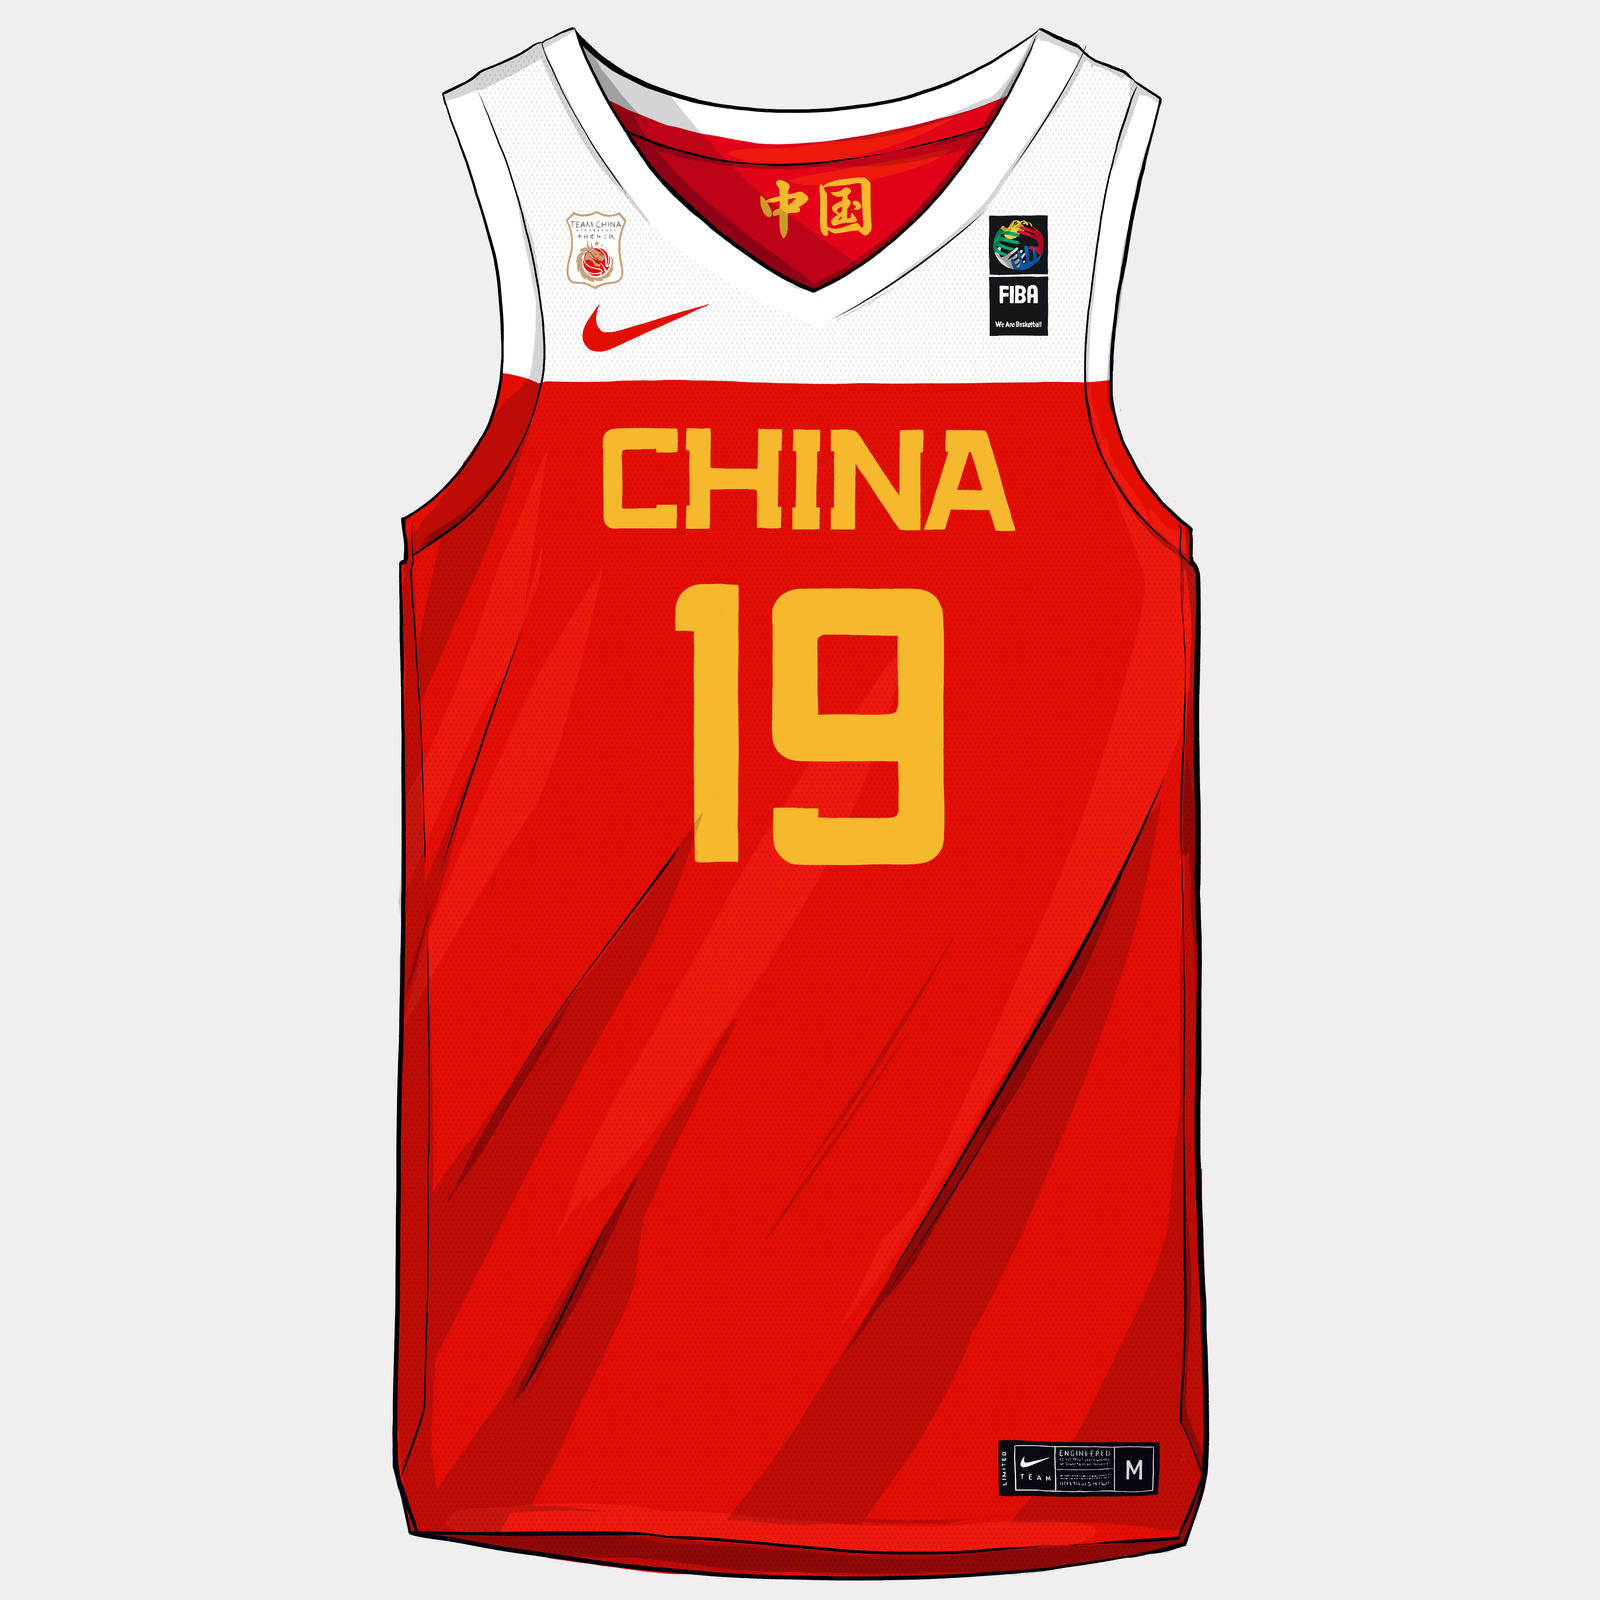 NikeNews_China19BasketballUniforms_chinared1x1v2_square_1600.jpg